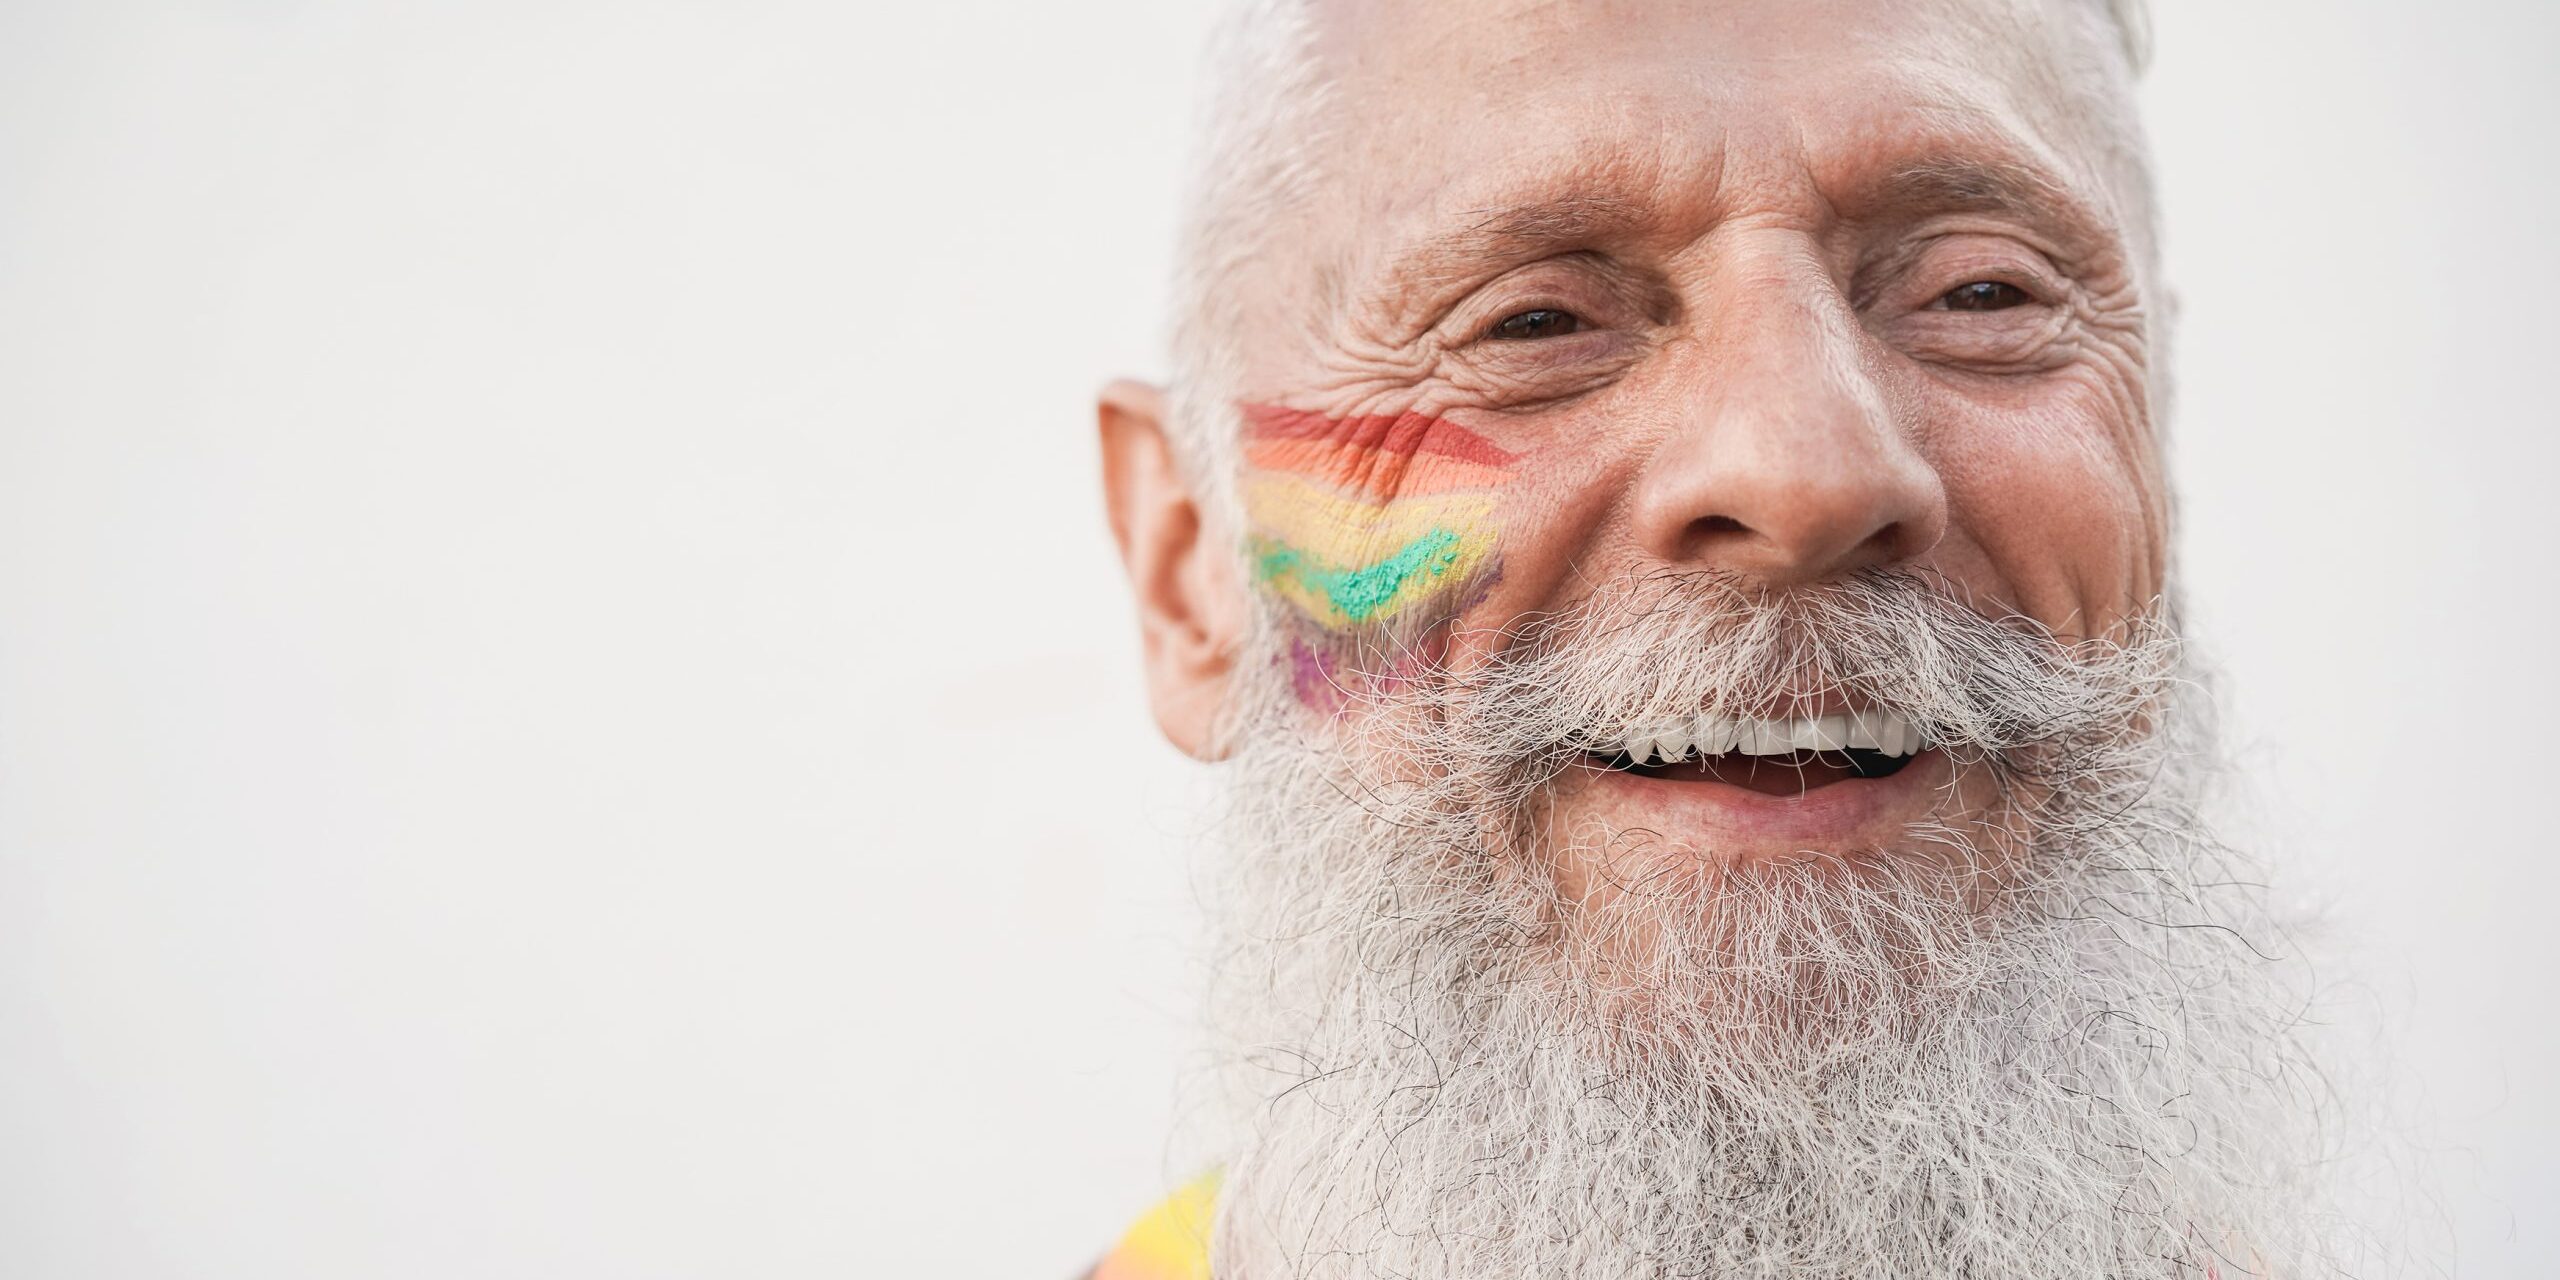 Senior gay man smiling during lgbt pride protest - Focus on face